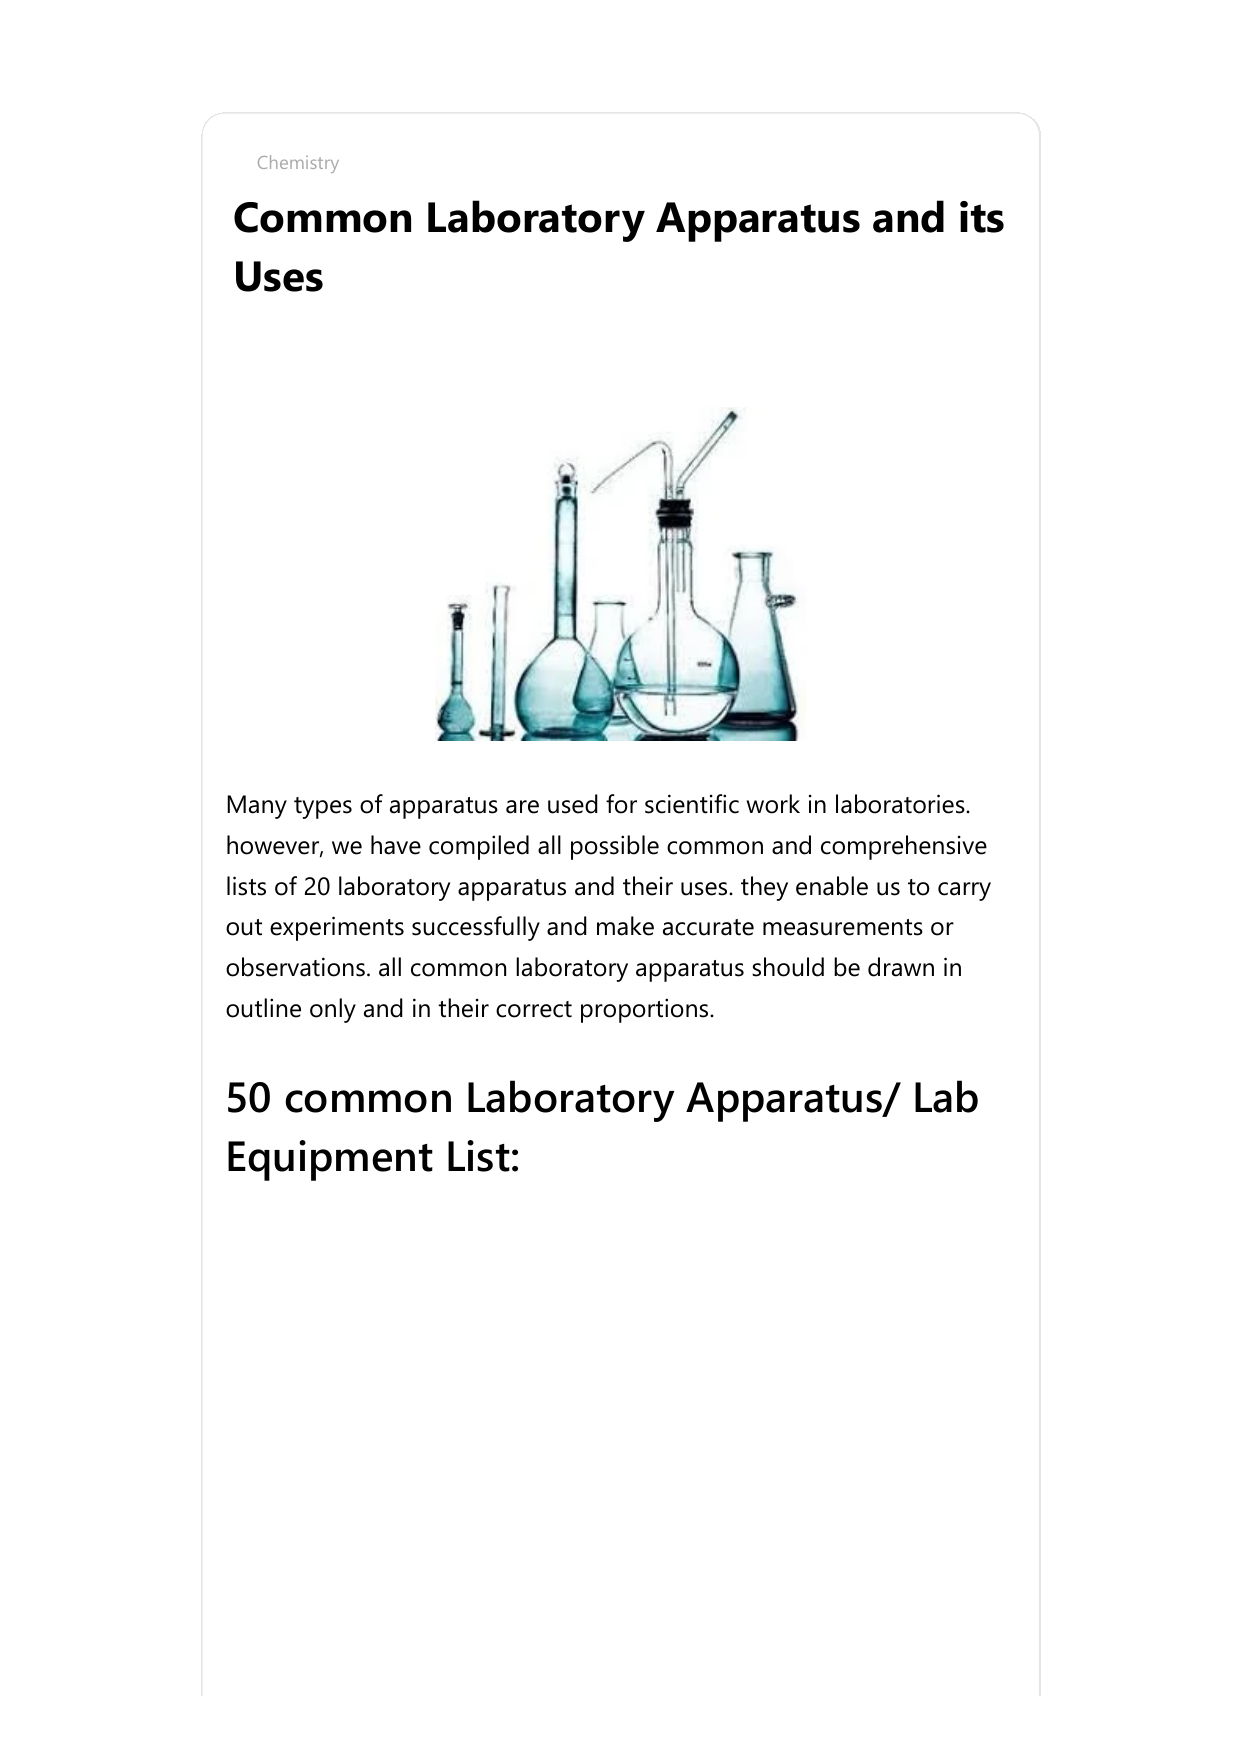 Common Laboratory Equipment (Gluckmann) Diagram